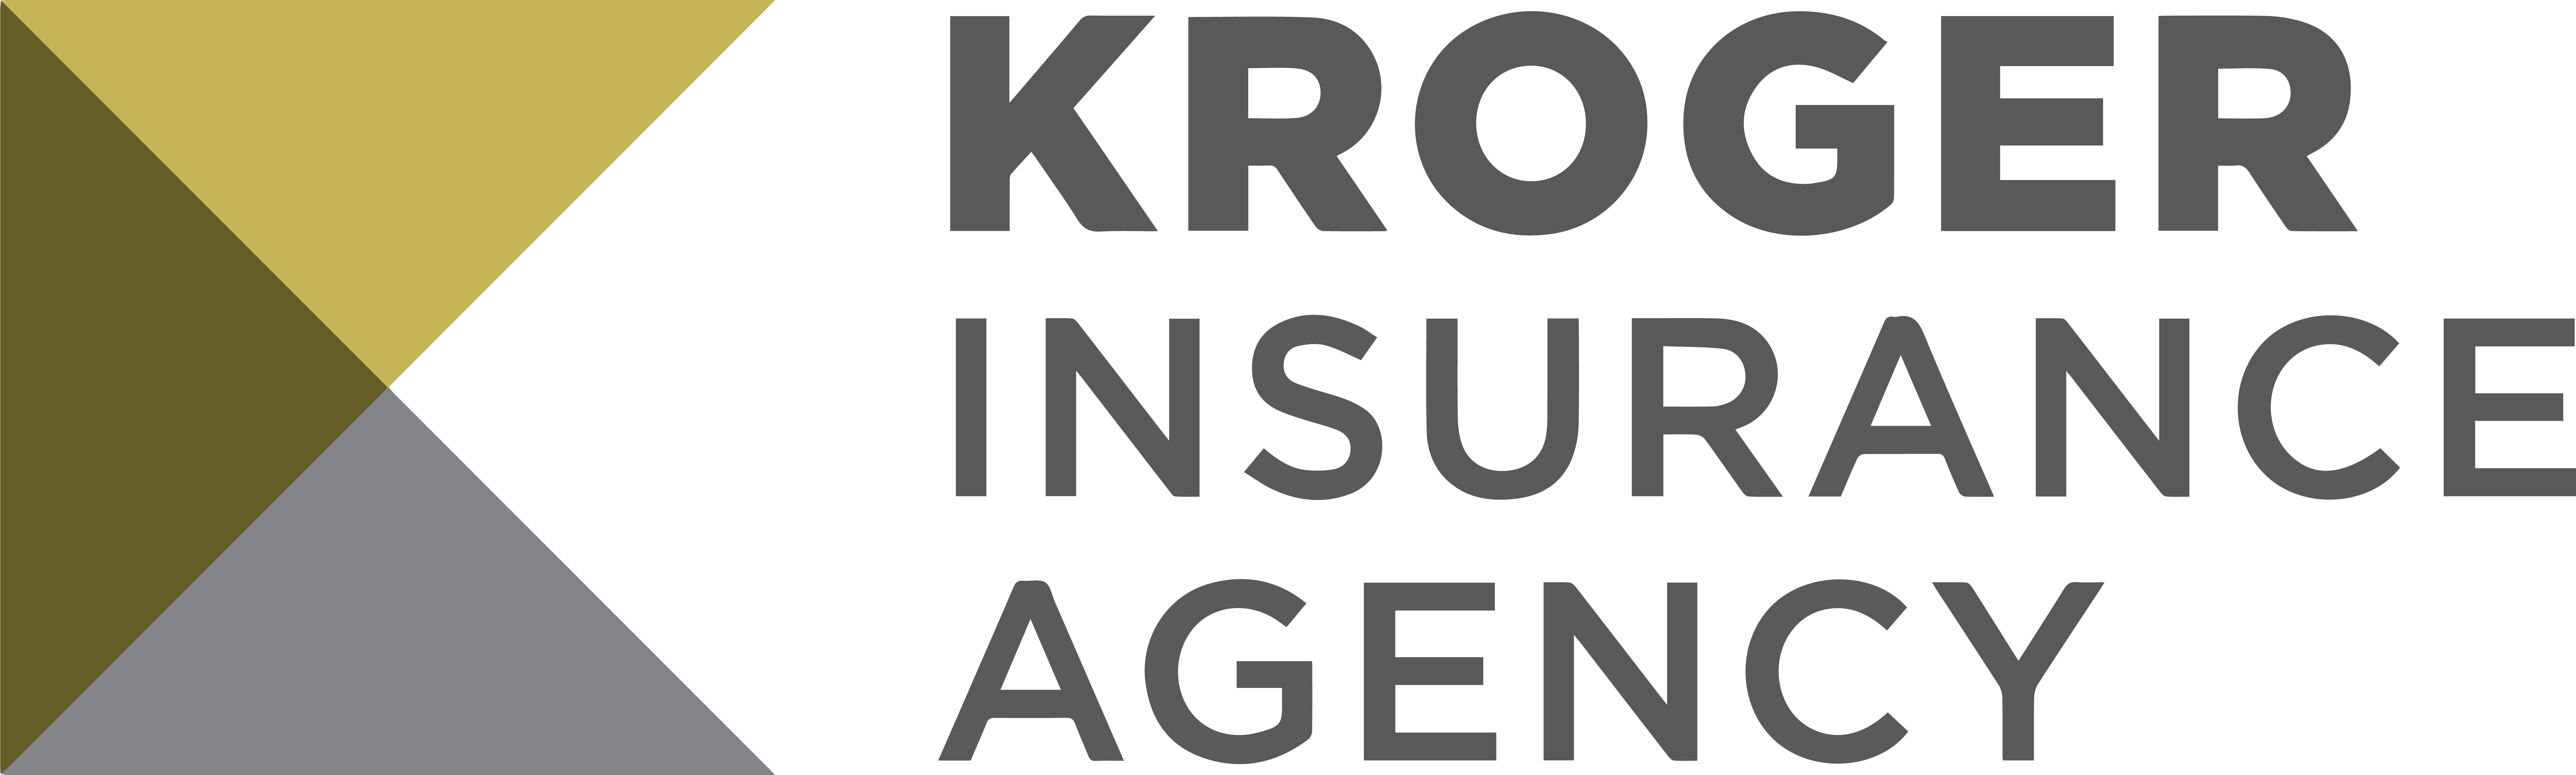 KROGER INSURANCE AGENCY - logo